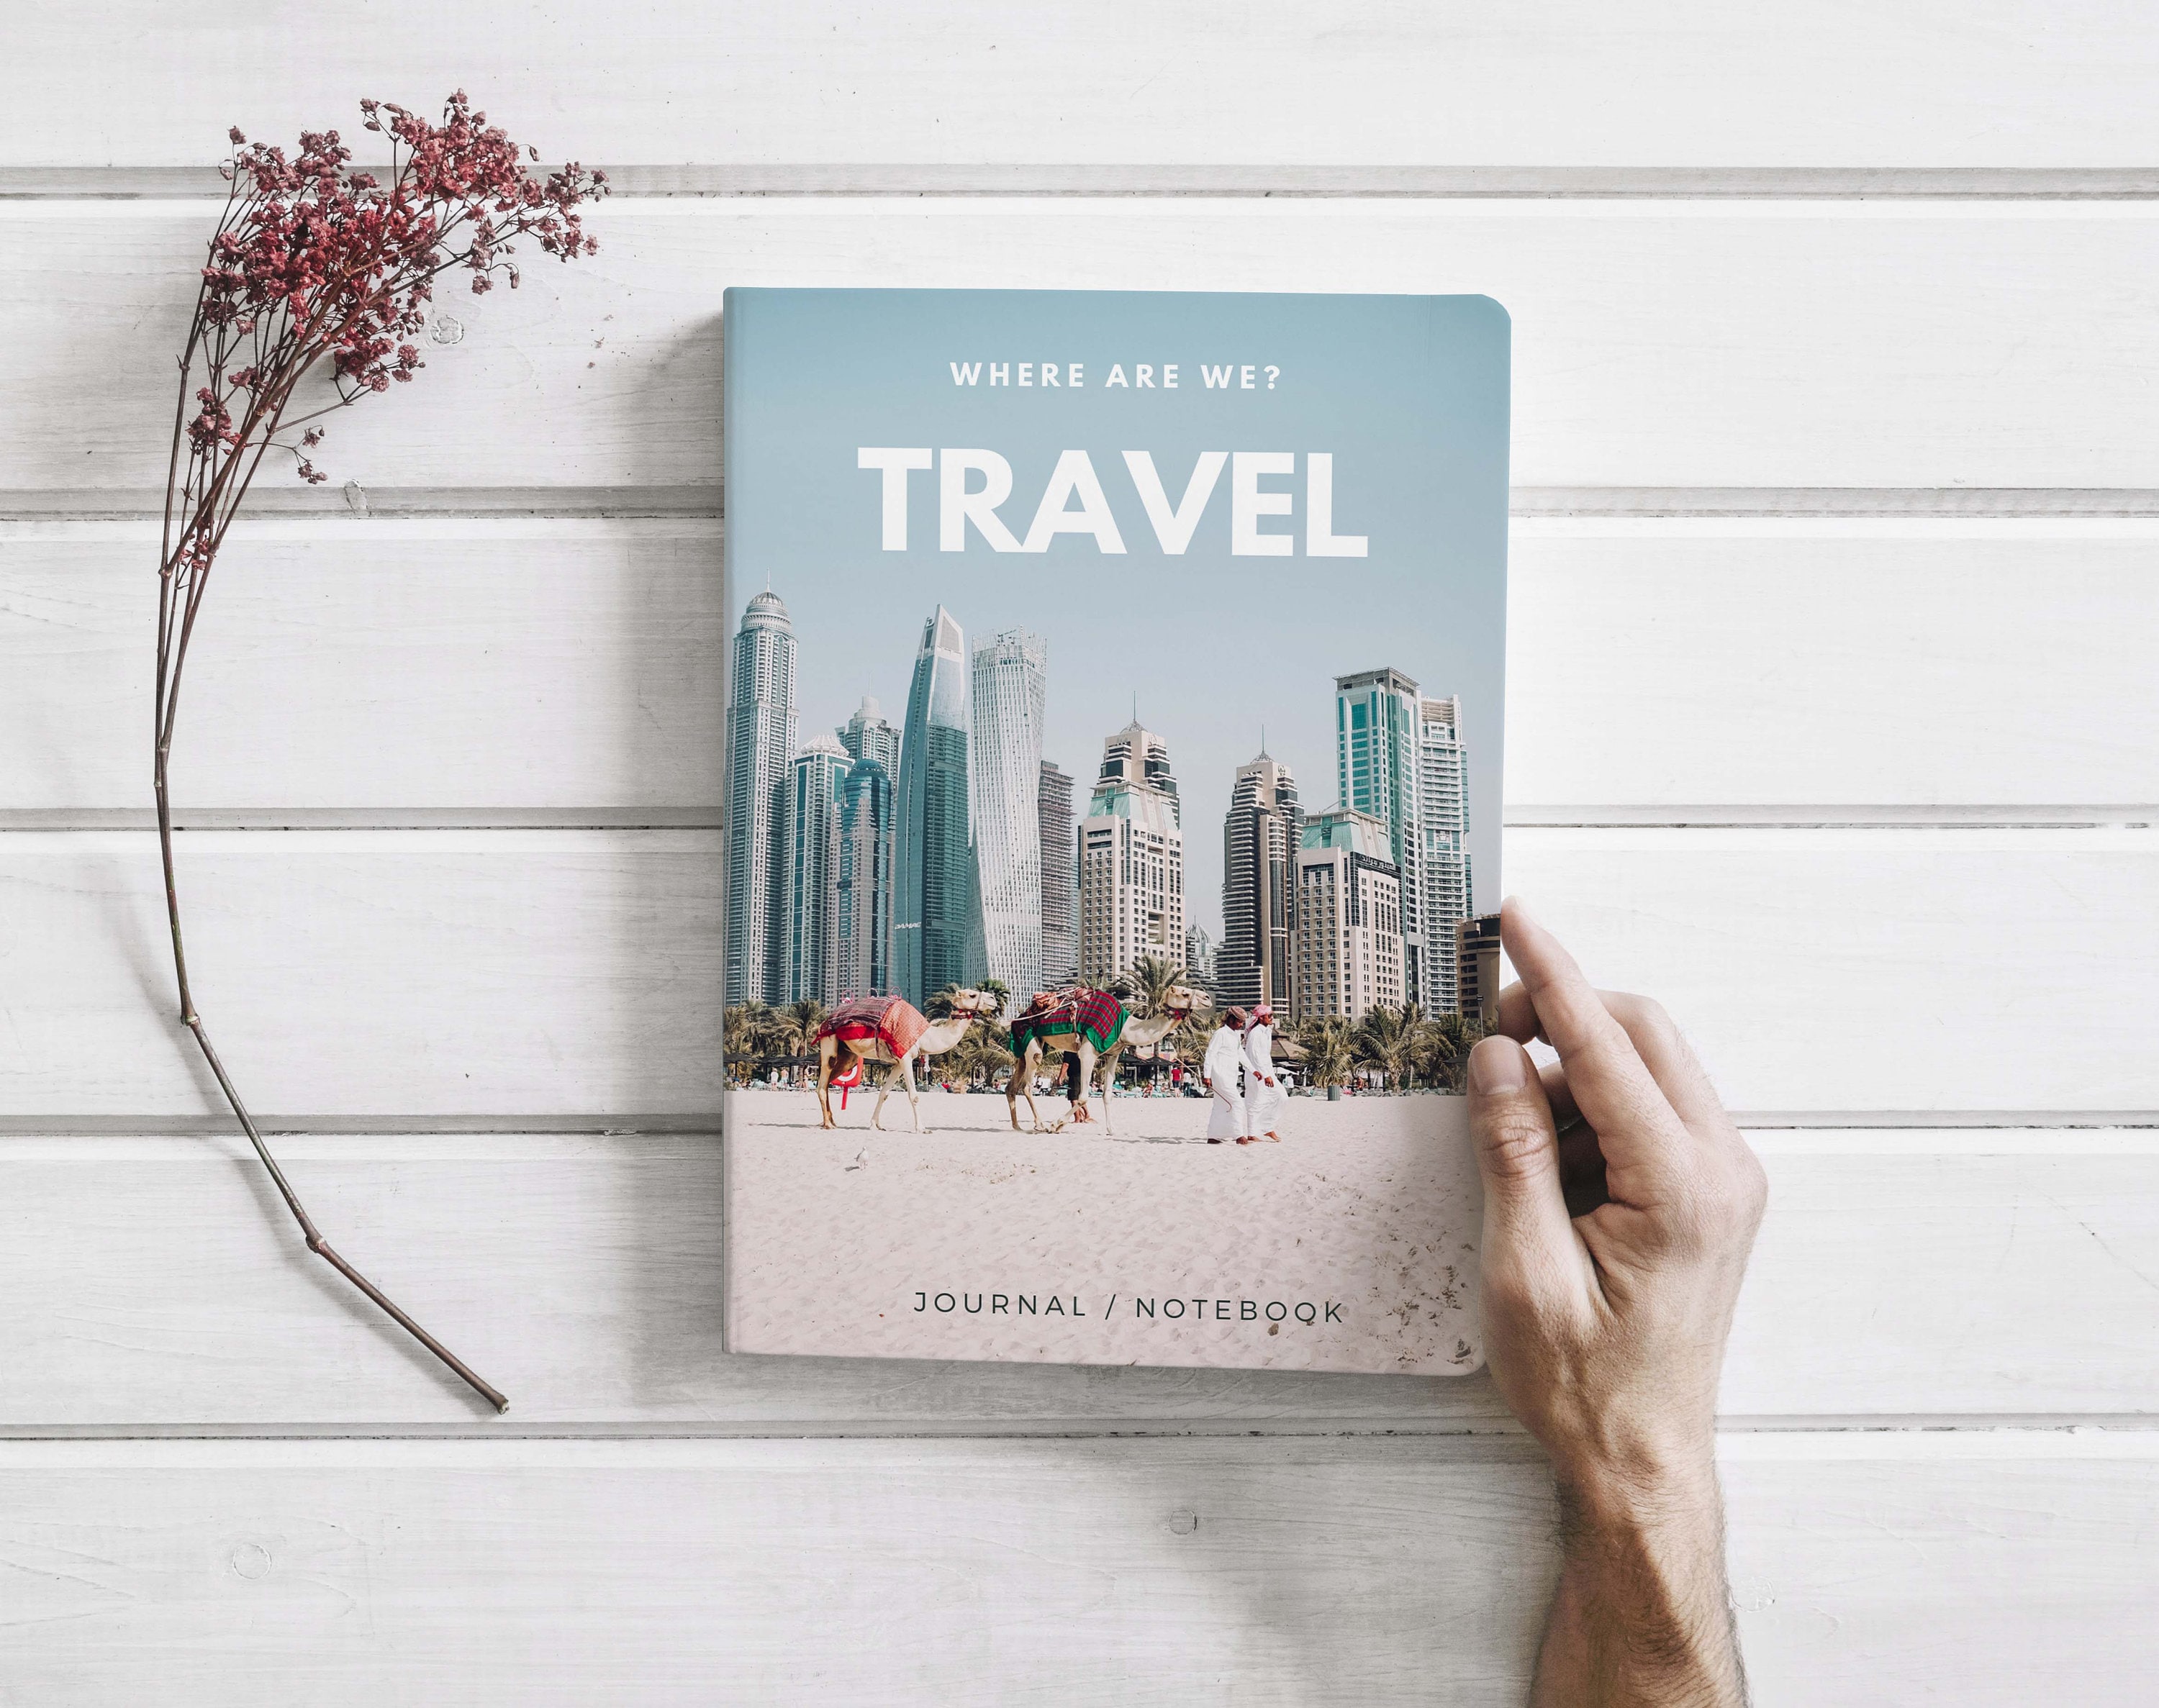 Travel Photo Books